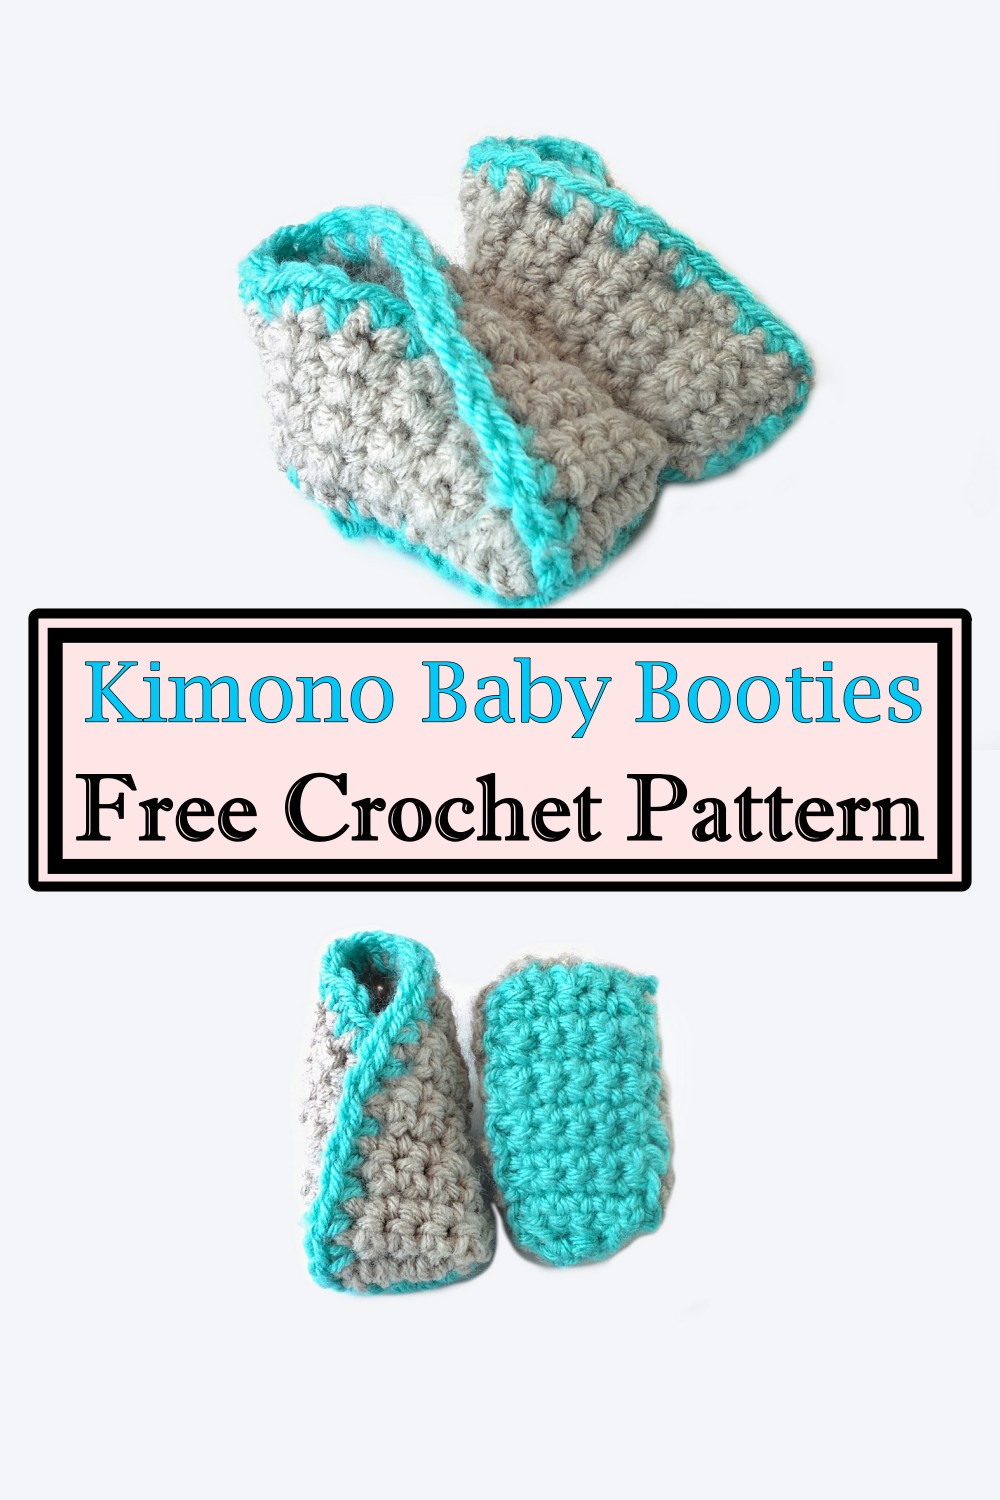 Kimono Baby Booties